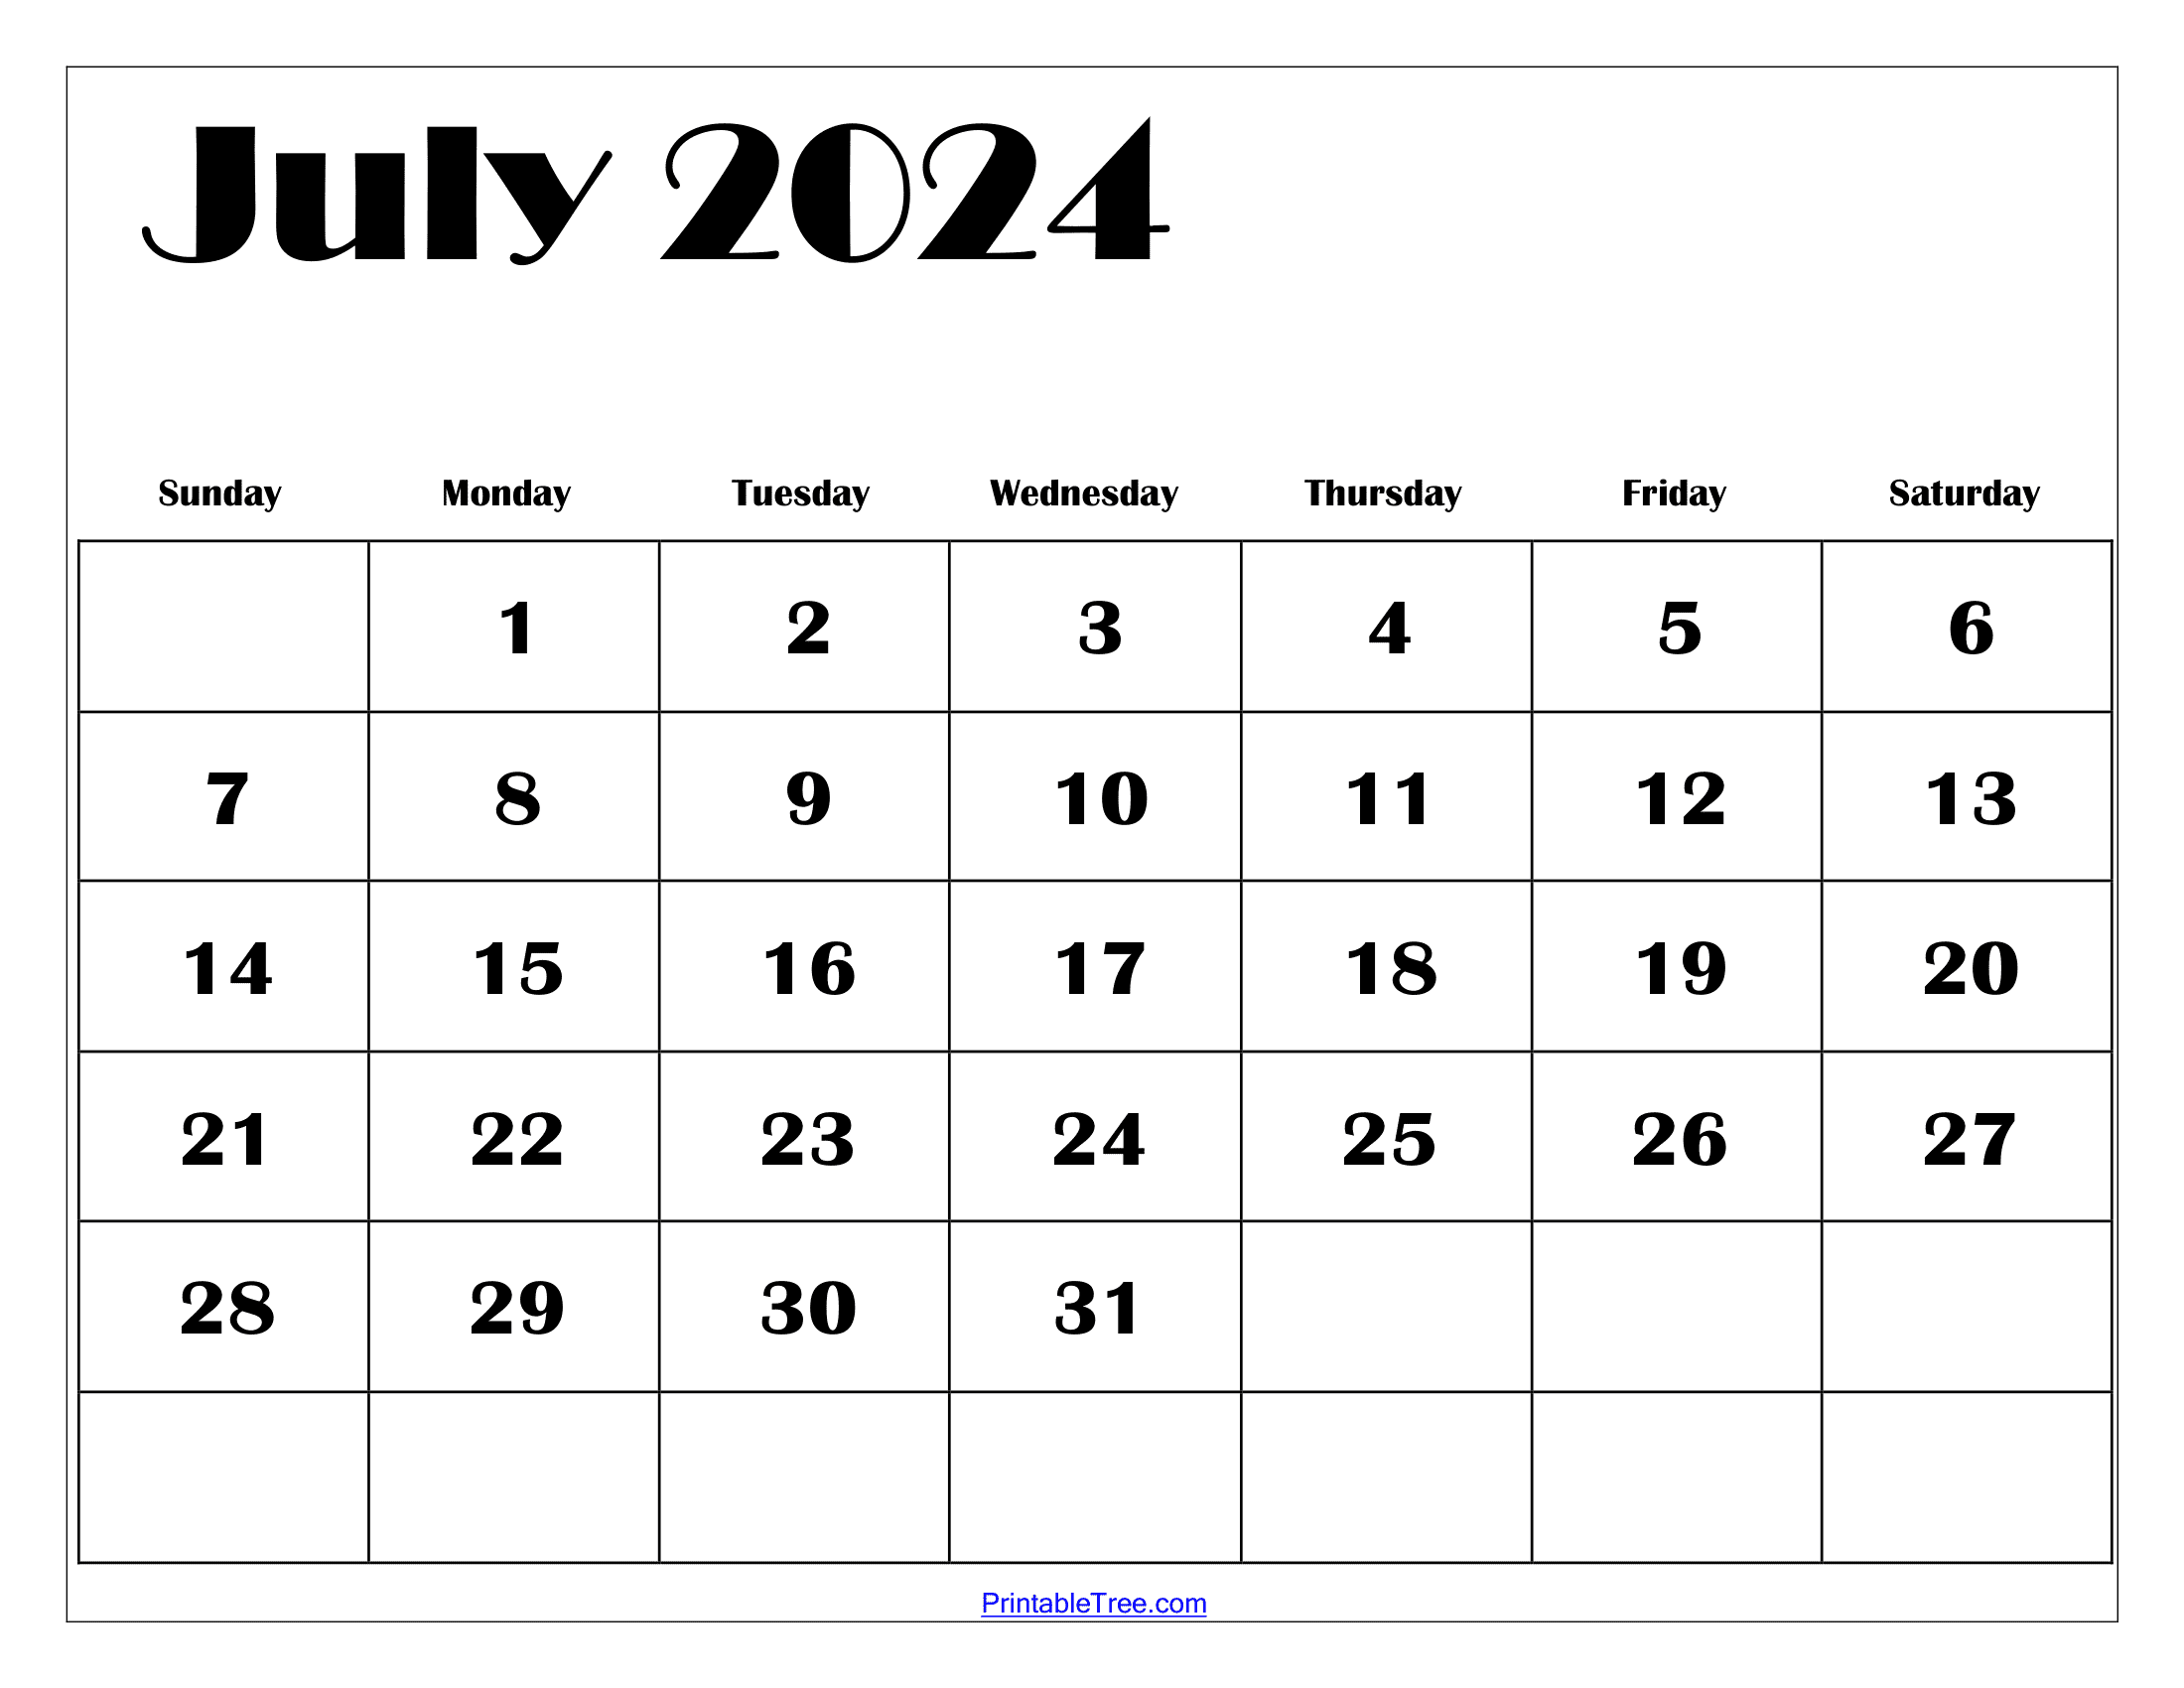 July 2024 Calendar Printable Pdf With Holidays Free Template for July 2024 Printable Calendar Free